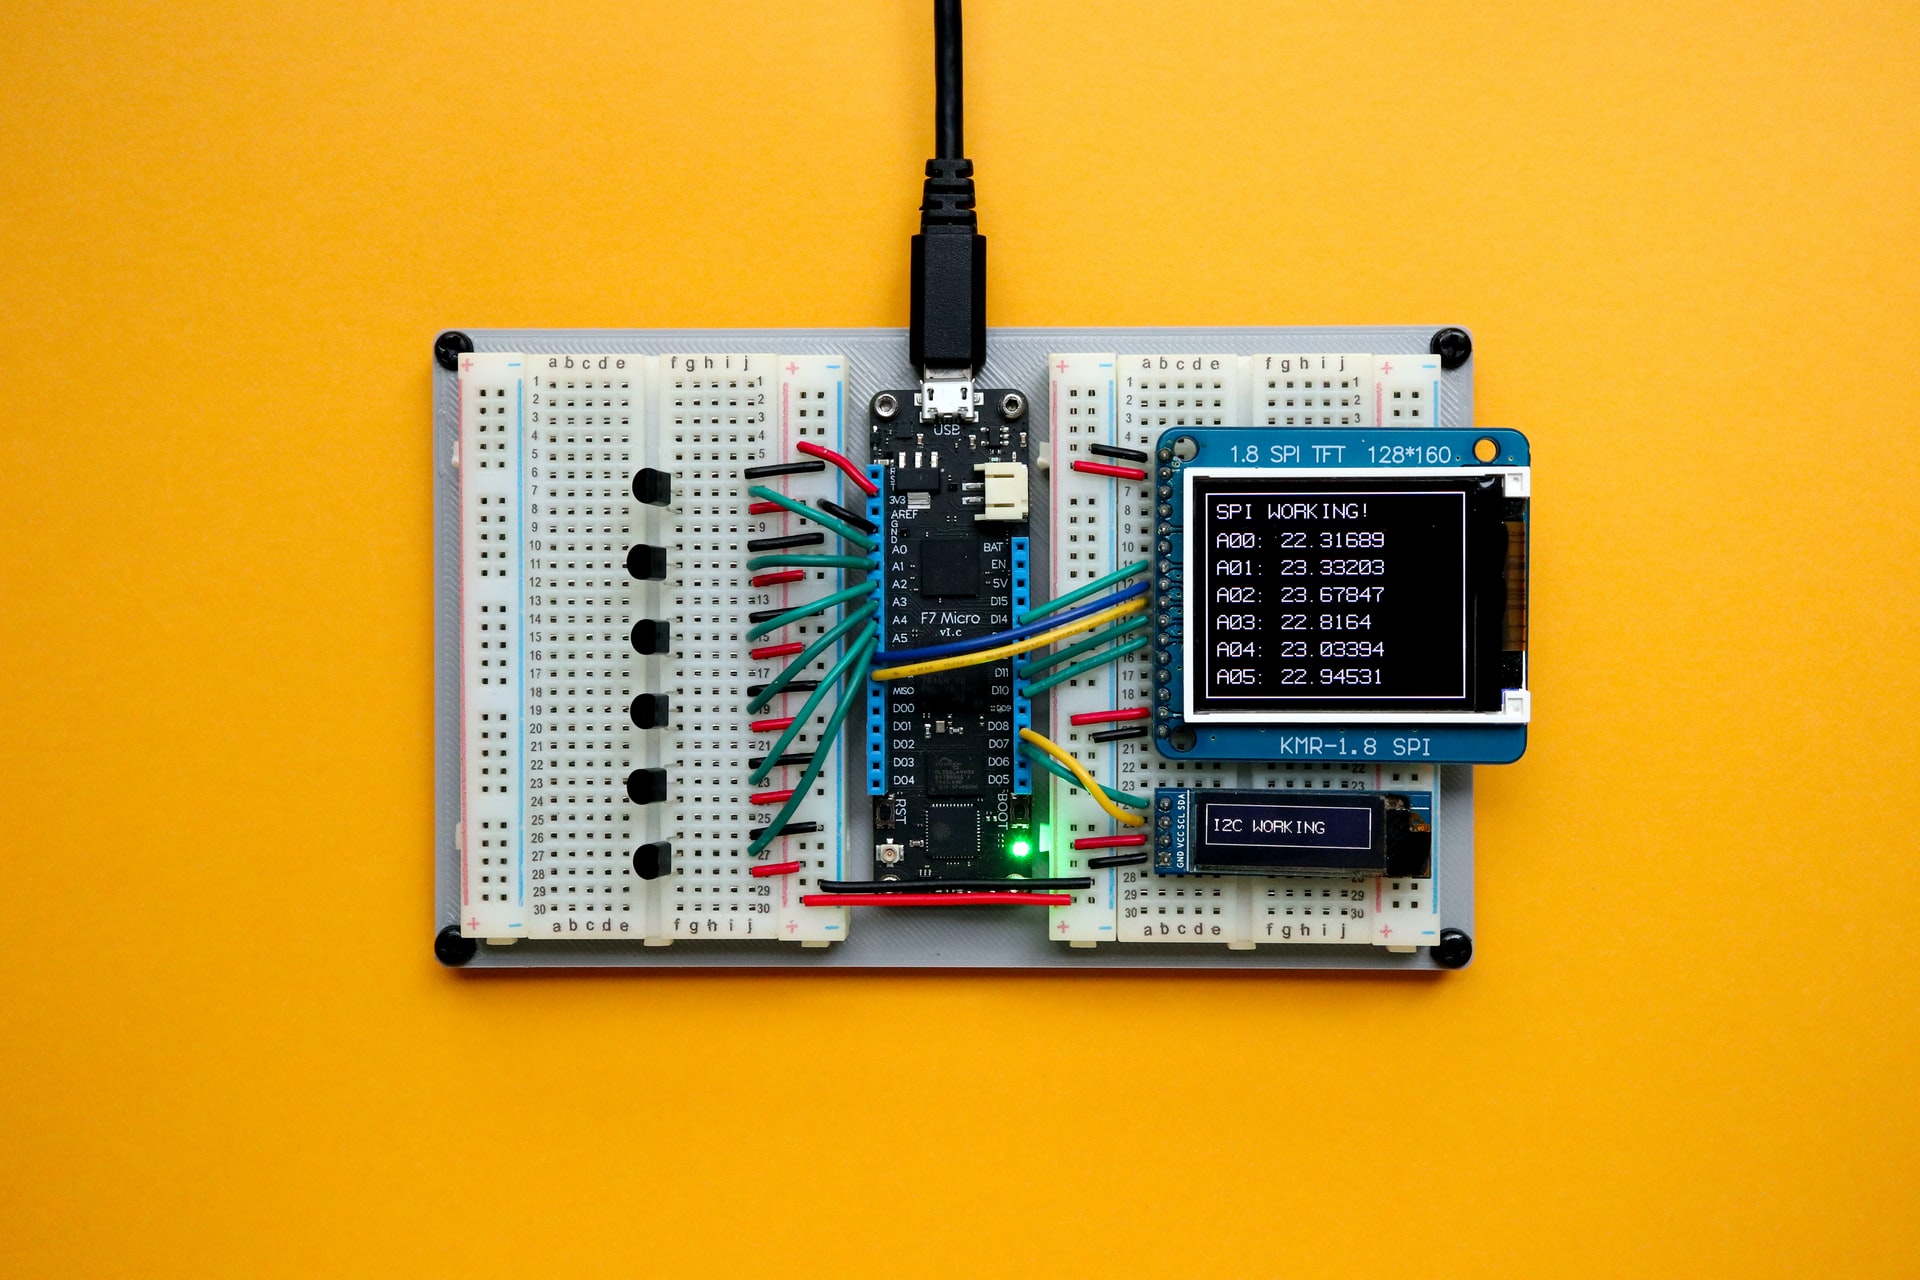 Photo of custom circuit board by Jorge Ramirez on Unsplash